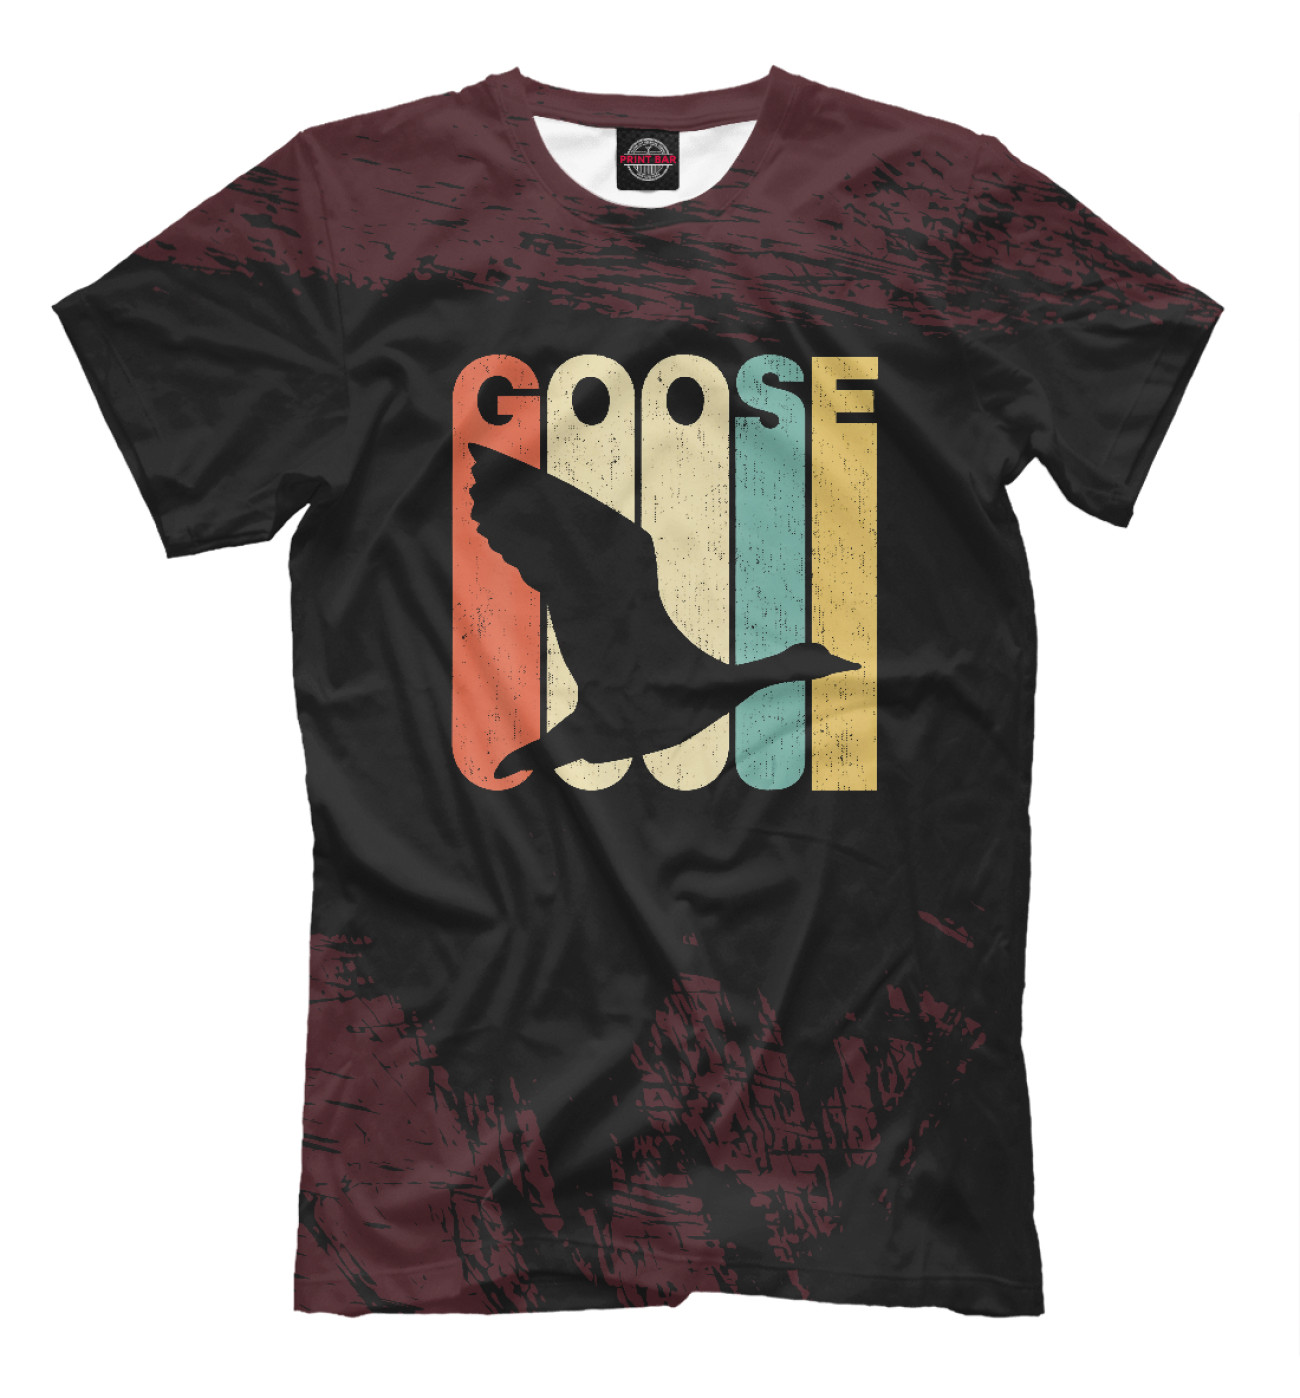 Мужская Футболка Vintage Retro Style Goose, артикул: GSI-497224-fut-2